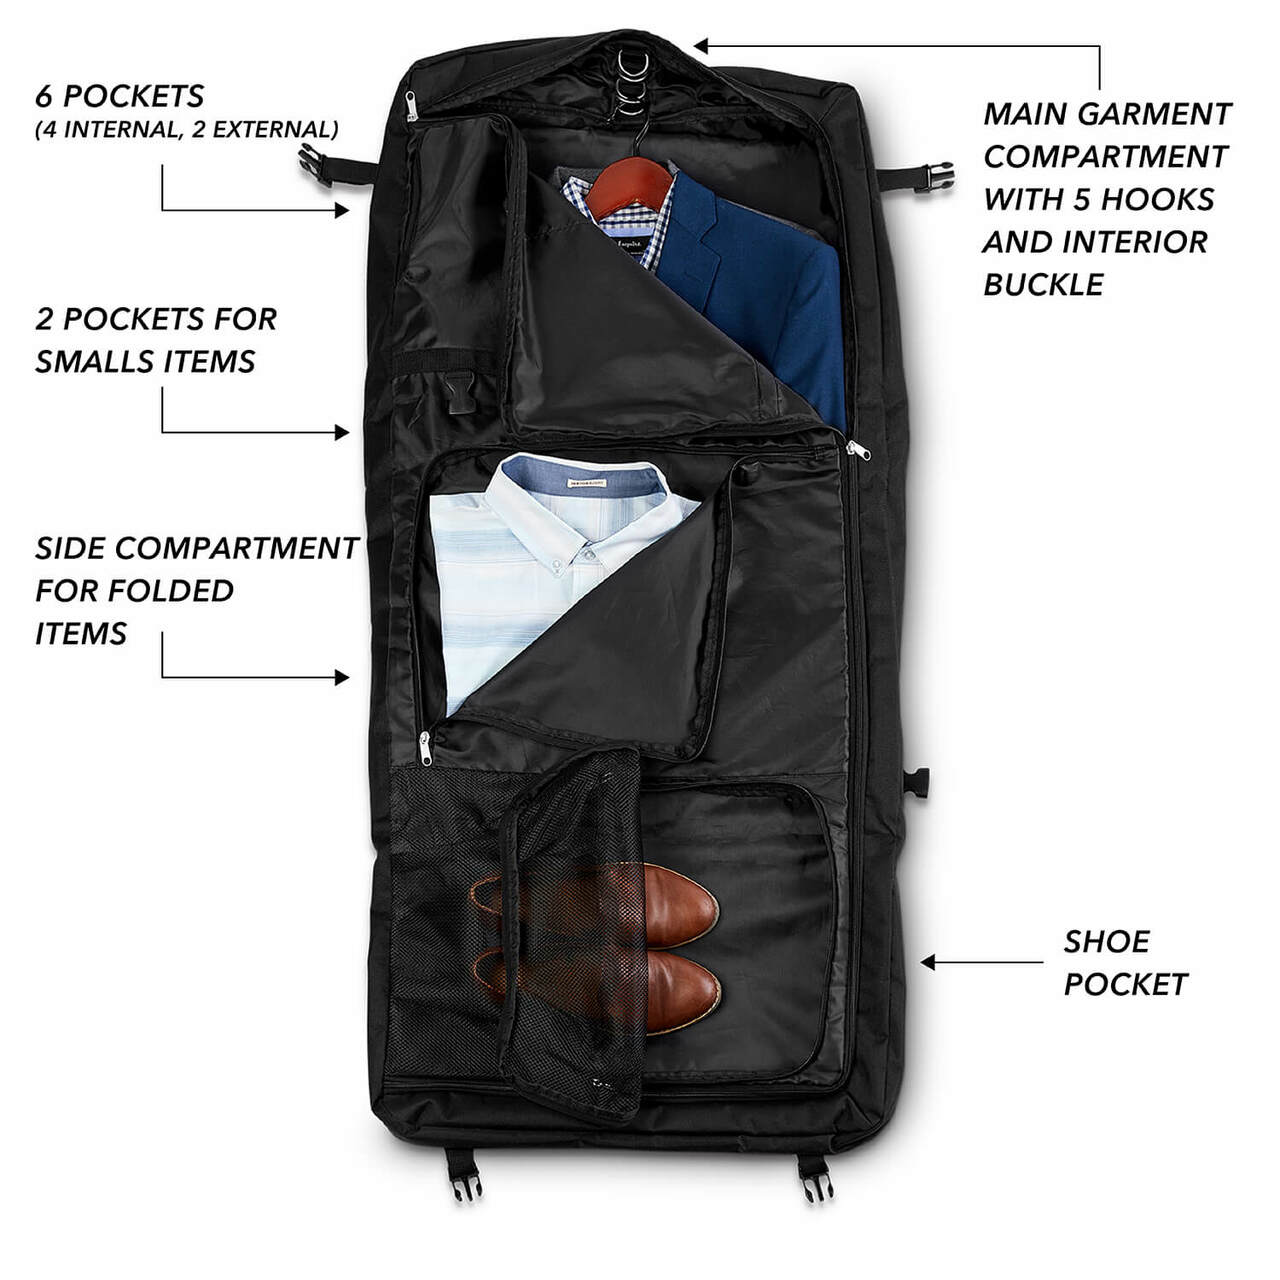 Milwaukee Brewers 18" Carry On Garment Bag